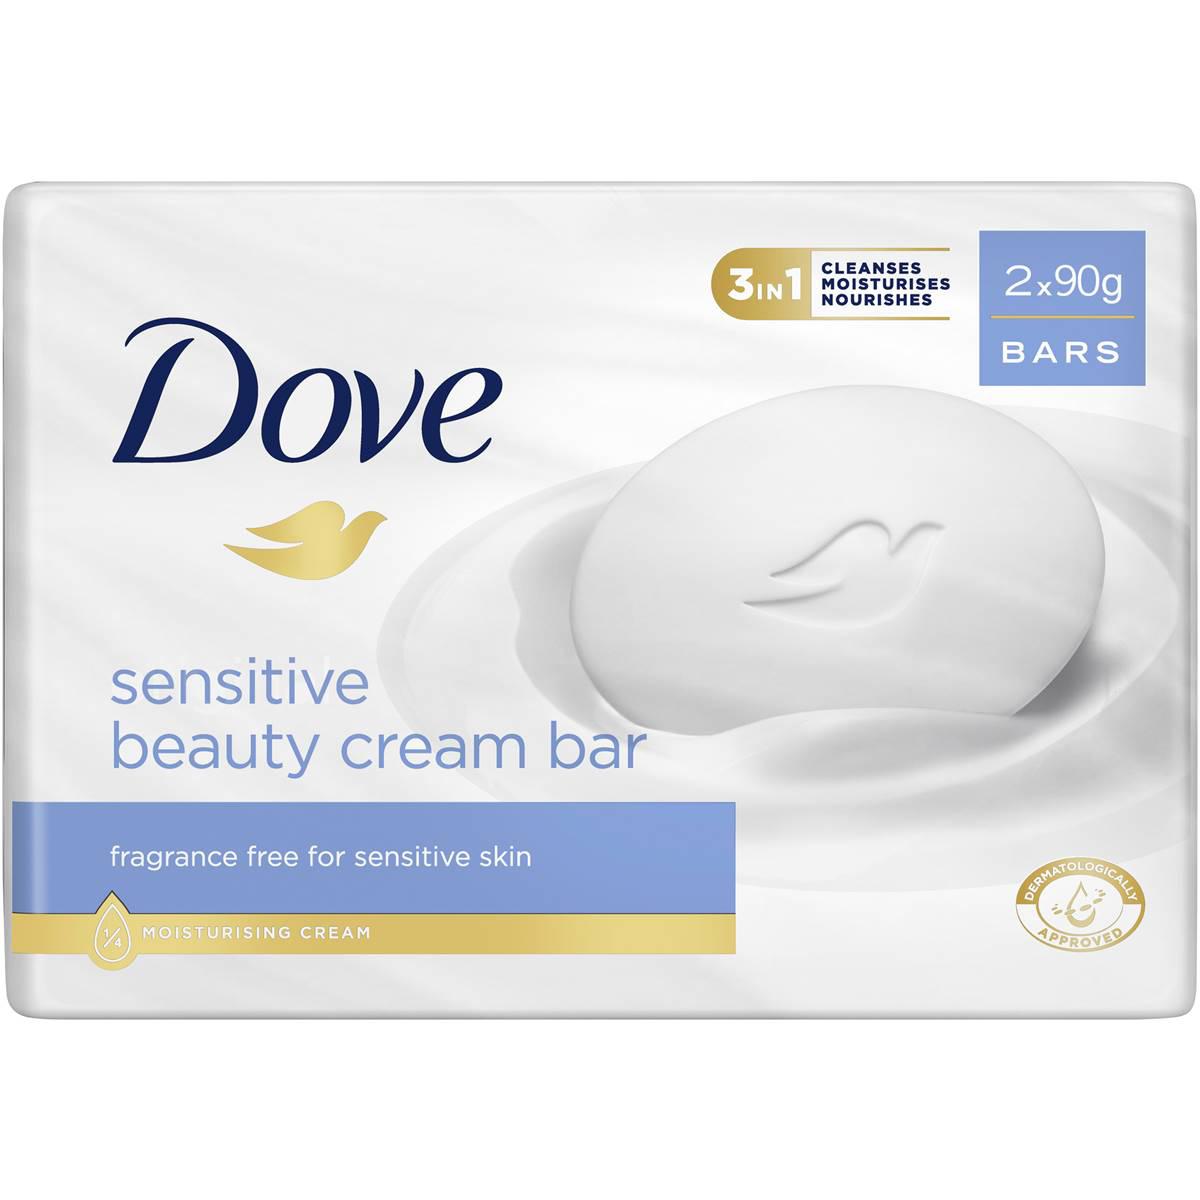 Dove Beauty Cream Bar Sensitive Soap 2x90g